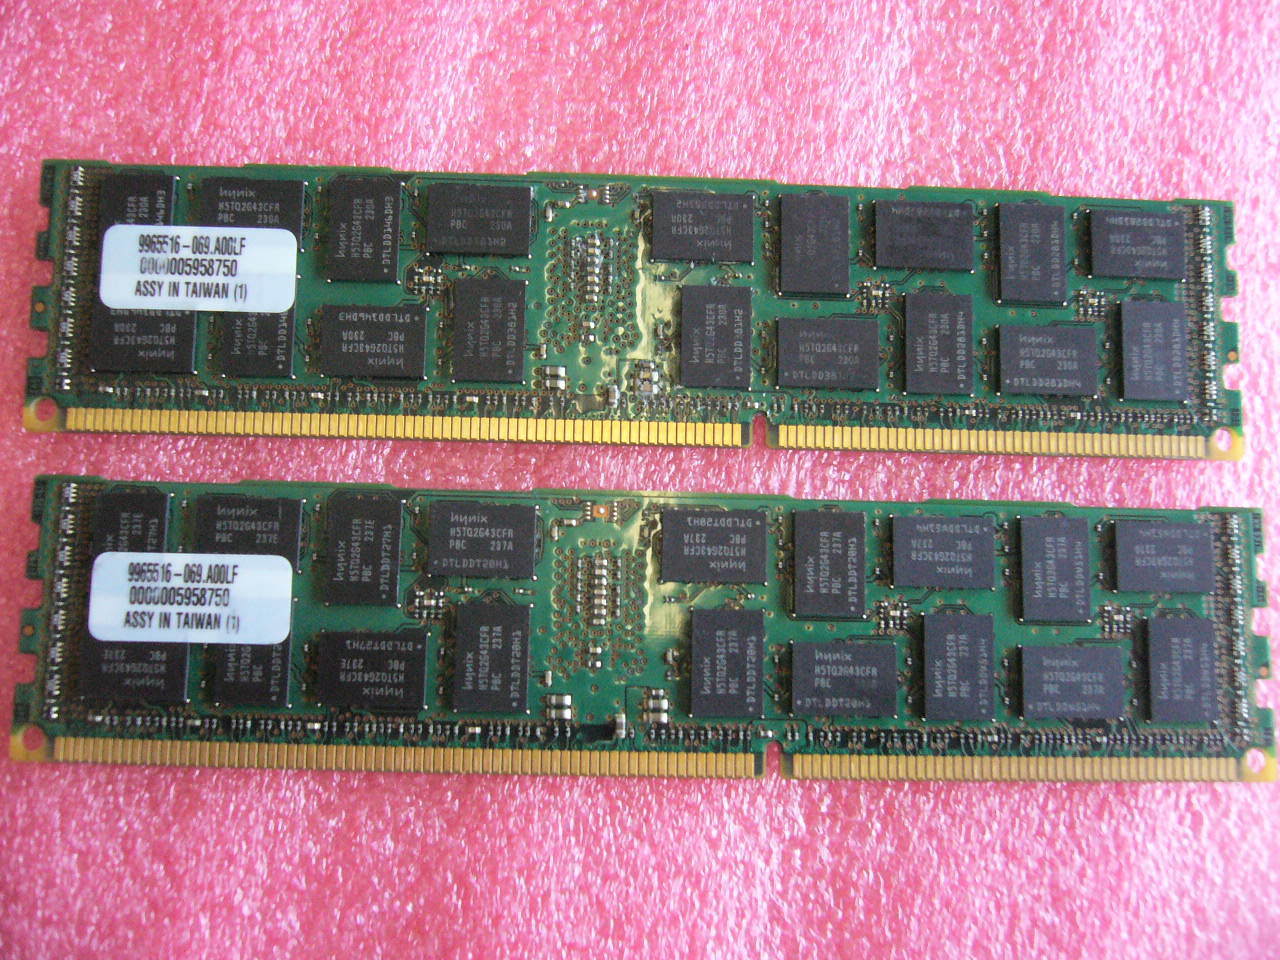 QTY 1x 8GB DDR3 ECC Registered Server memory Kingston KTD-PE313/8G - Click Image to Close